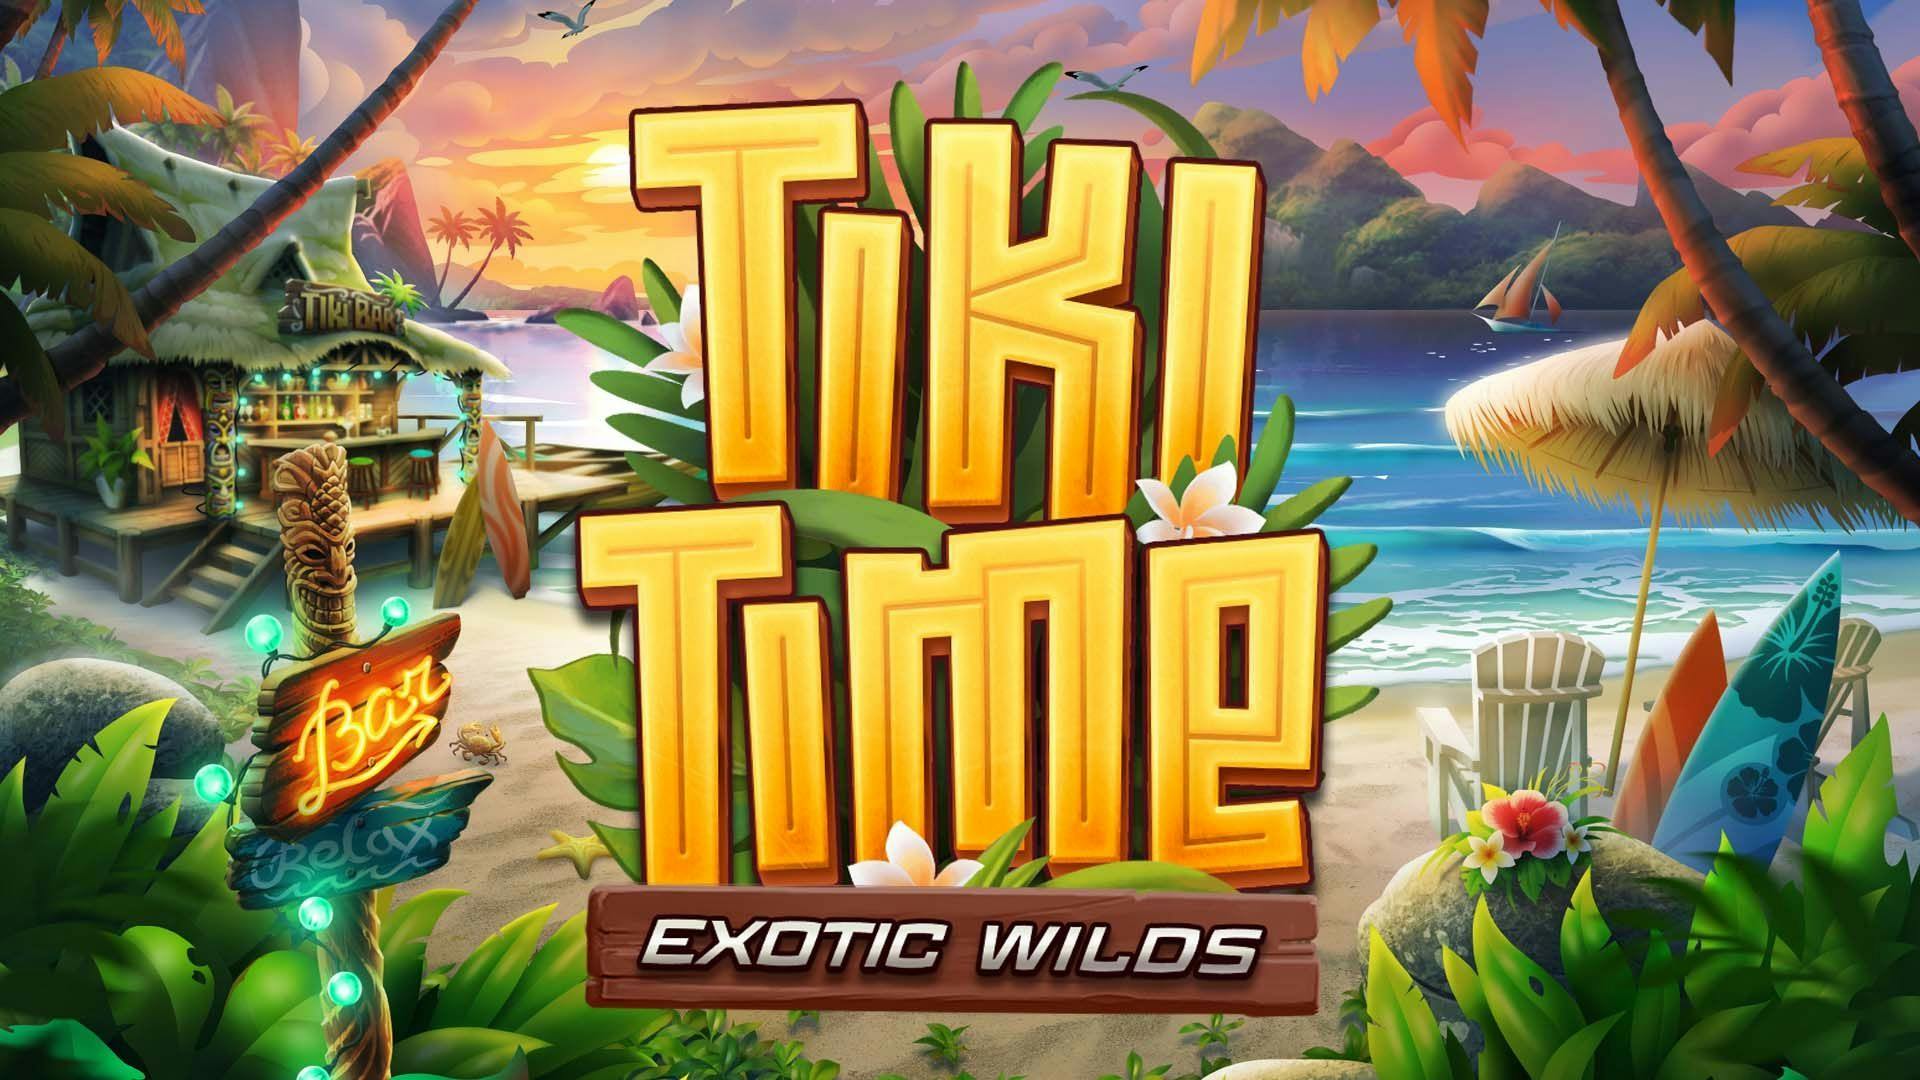 Tiki Time Exotic Wilds Slot Machine Online Free Game Play